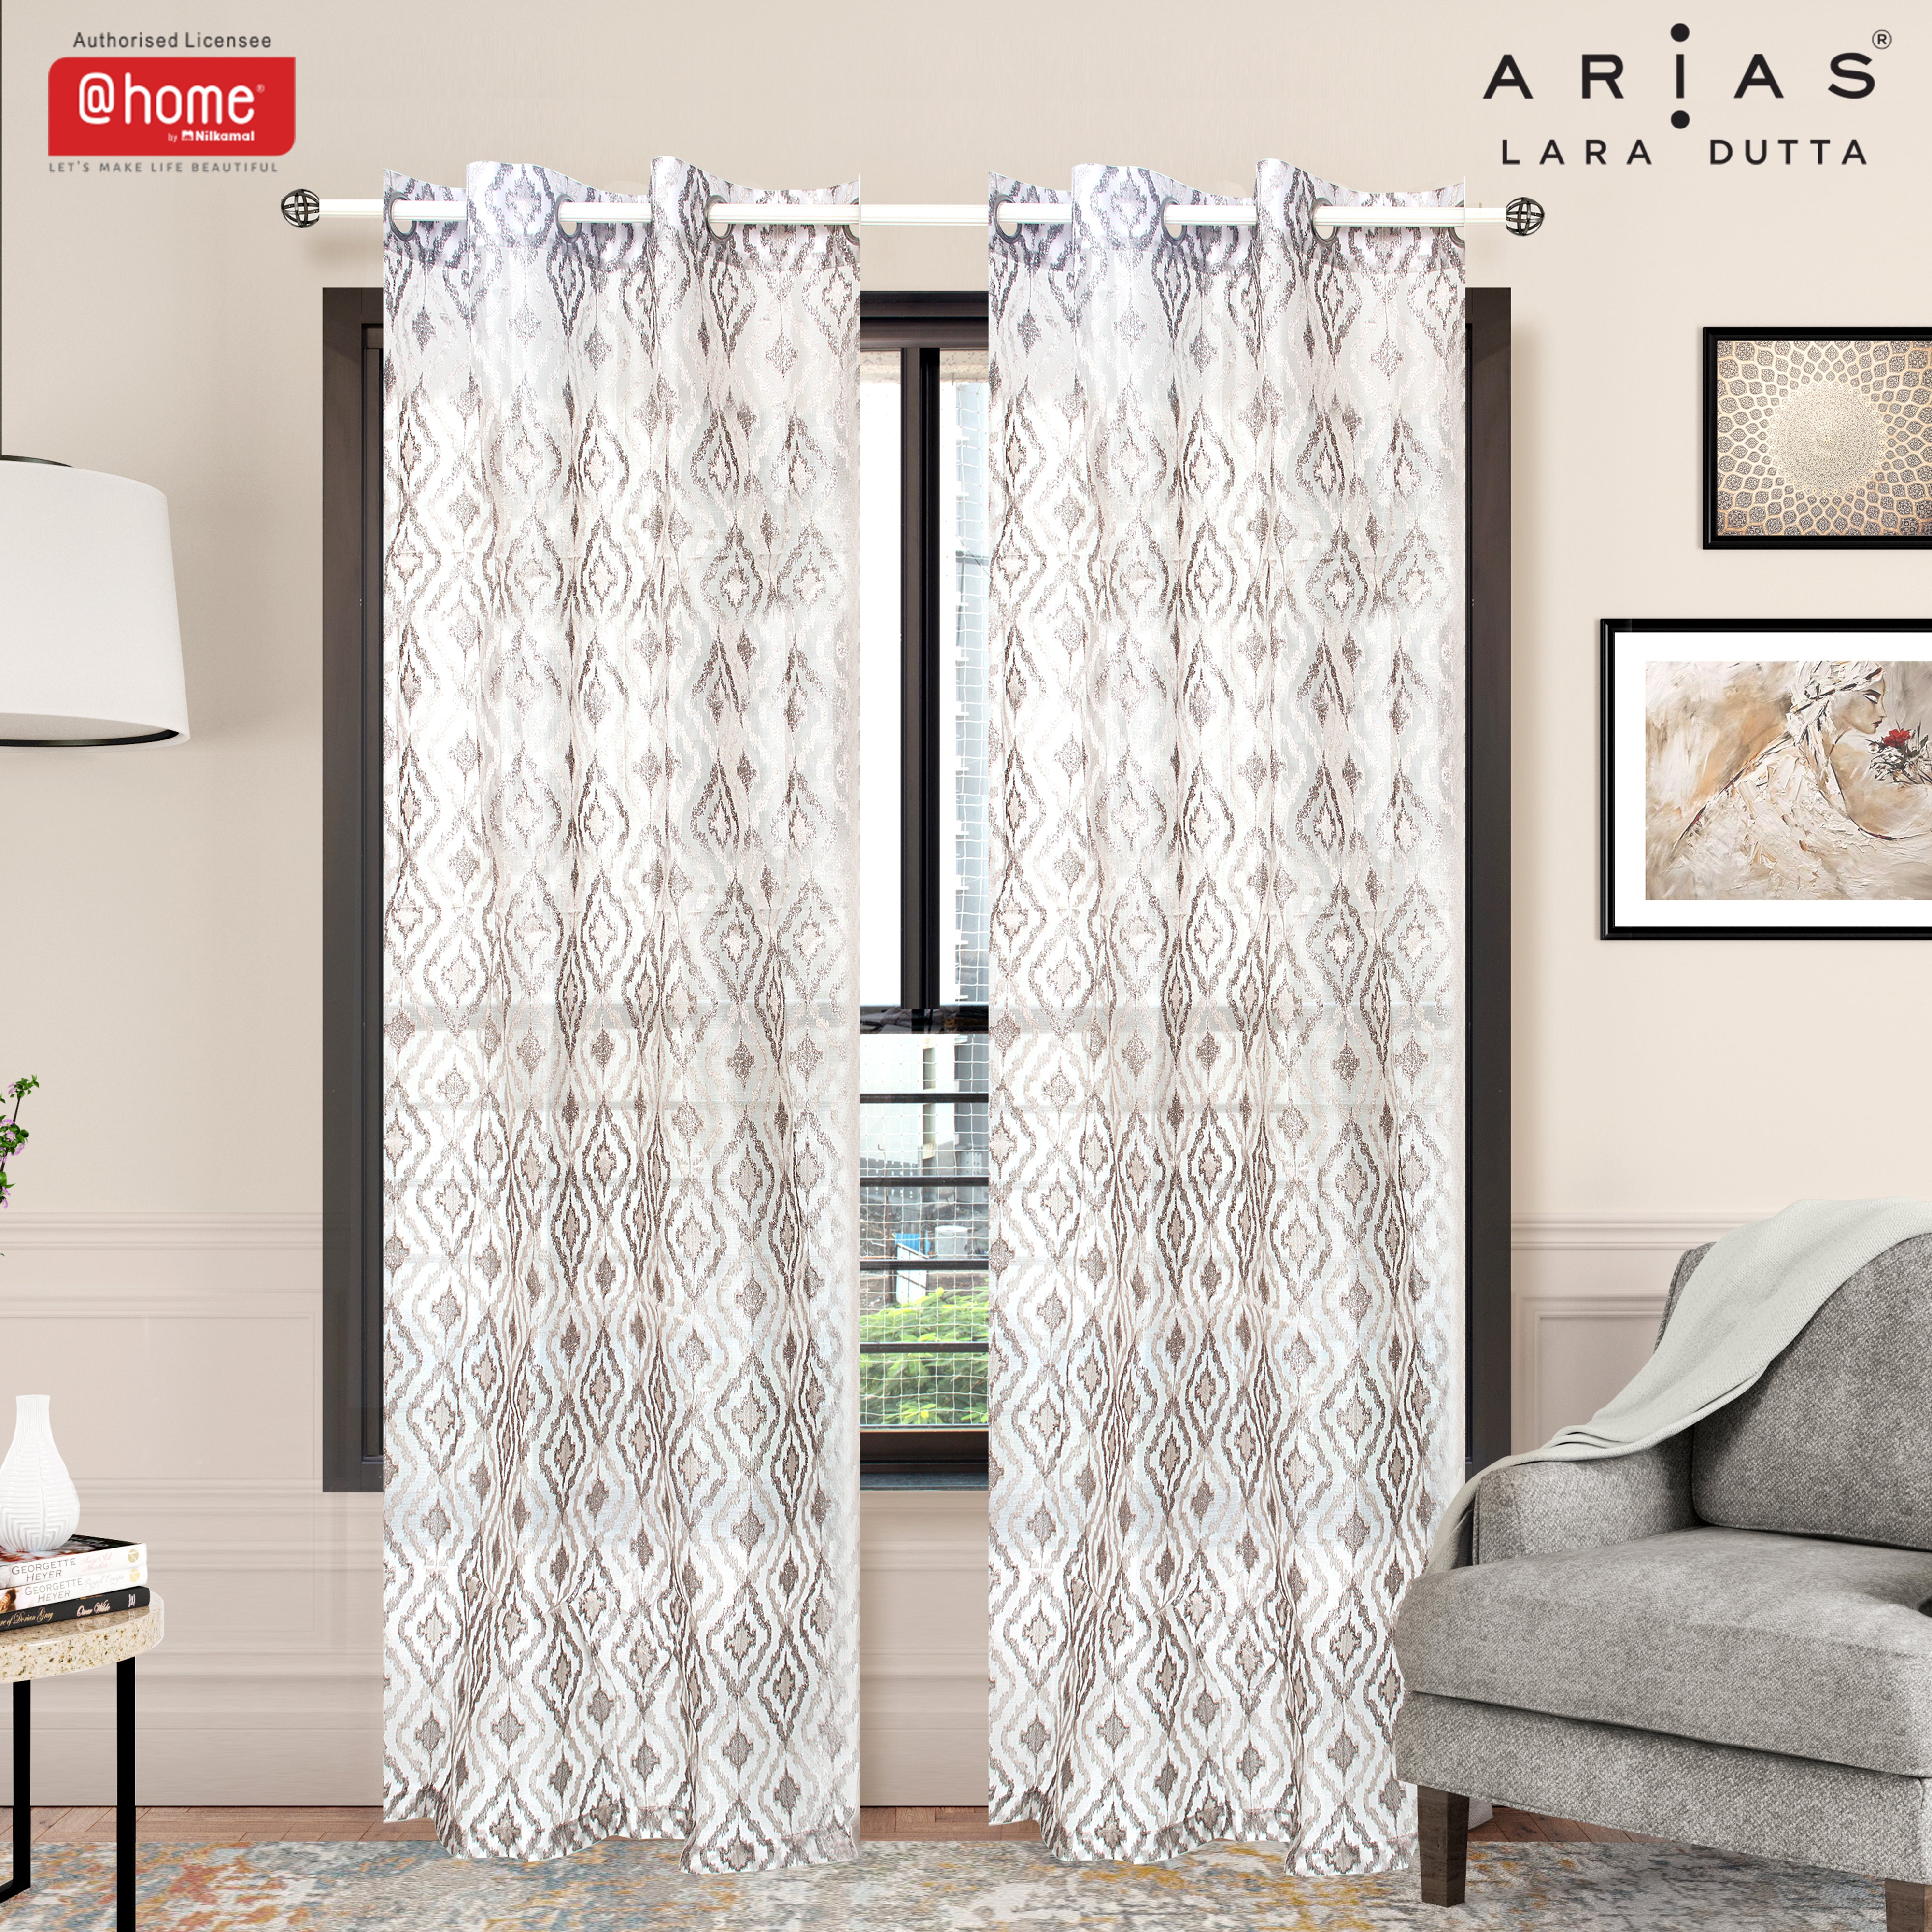 Arias Luxuria Sheers Abstract 9 Ft Crepe Organza Long Door Curtain Set of 2 (Grey)